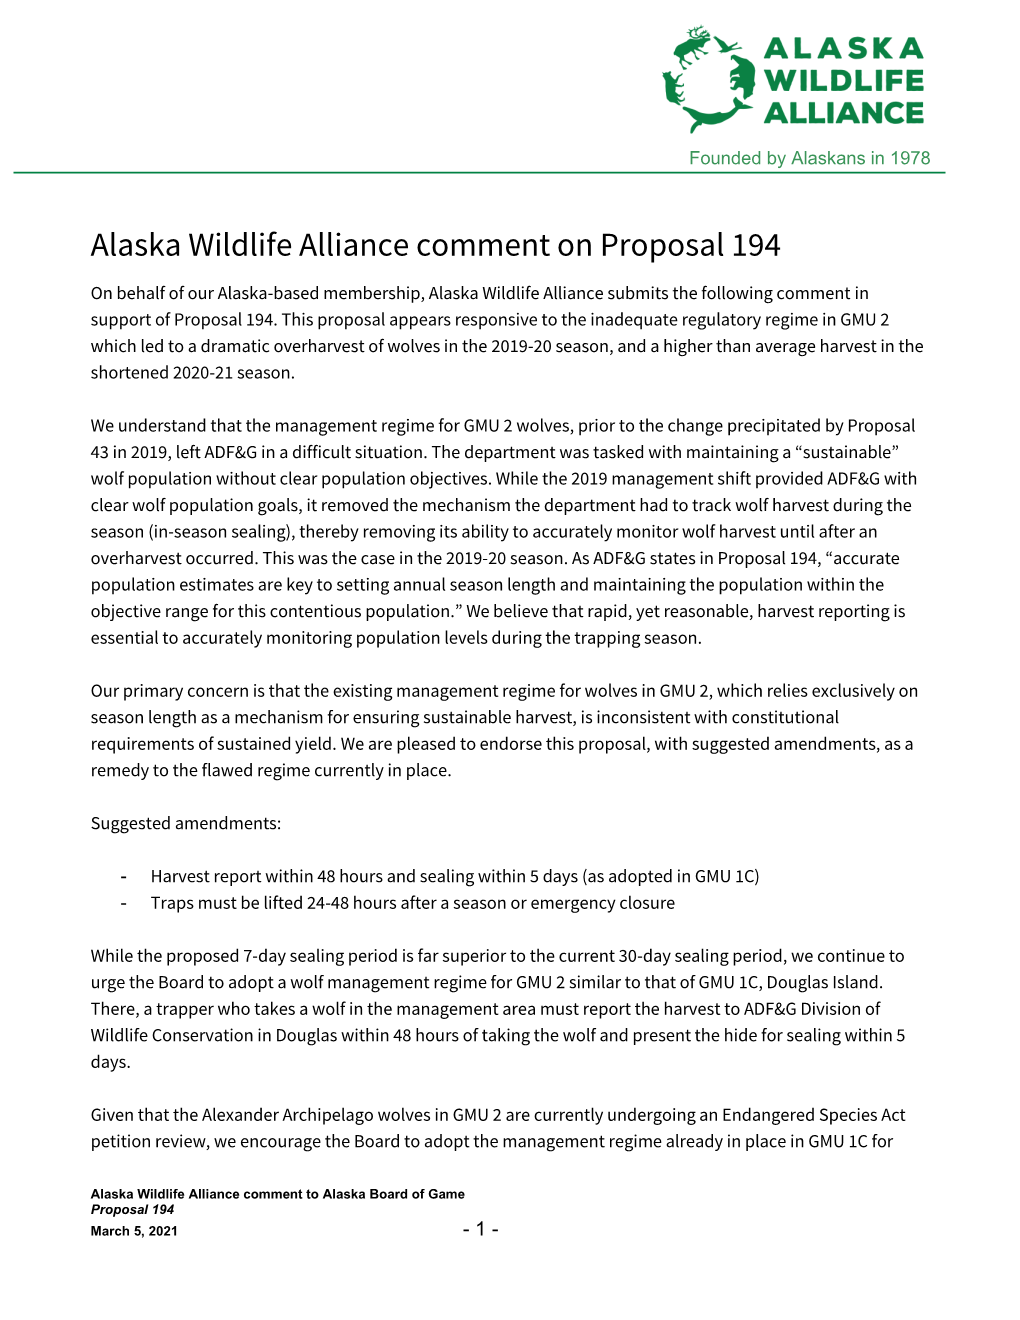 Alaska Wildlife Alliance Comment on Proposal 194